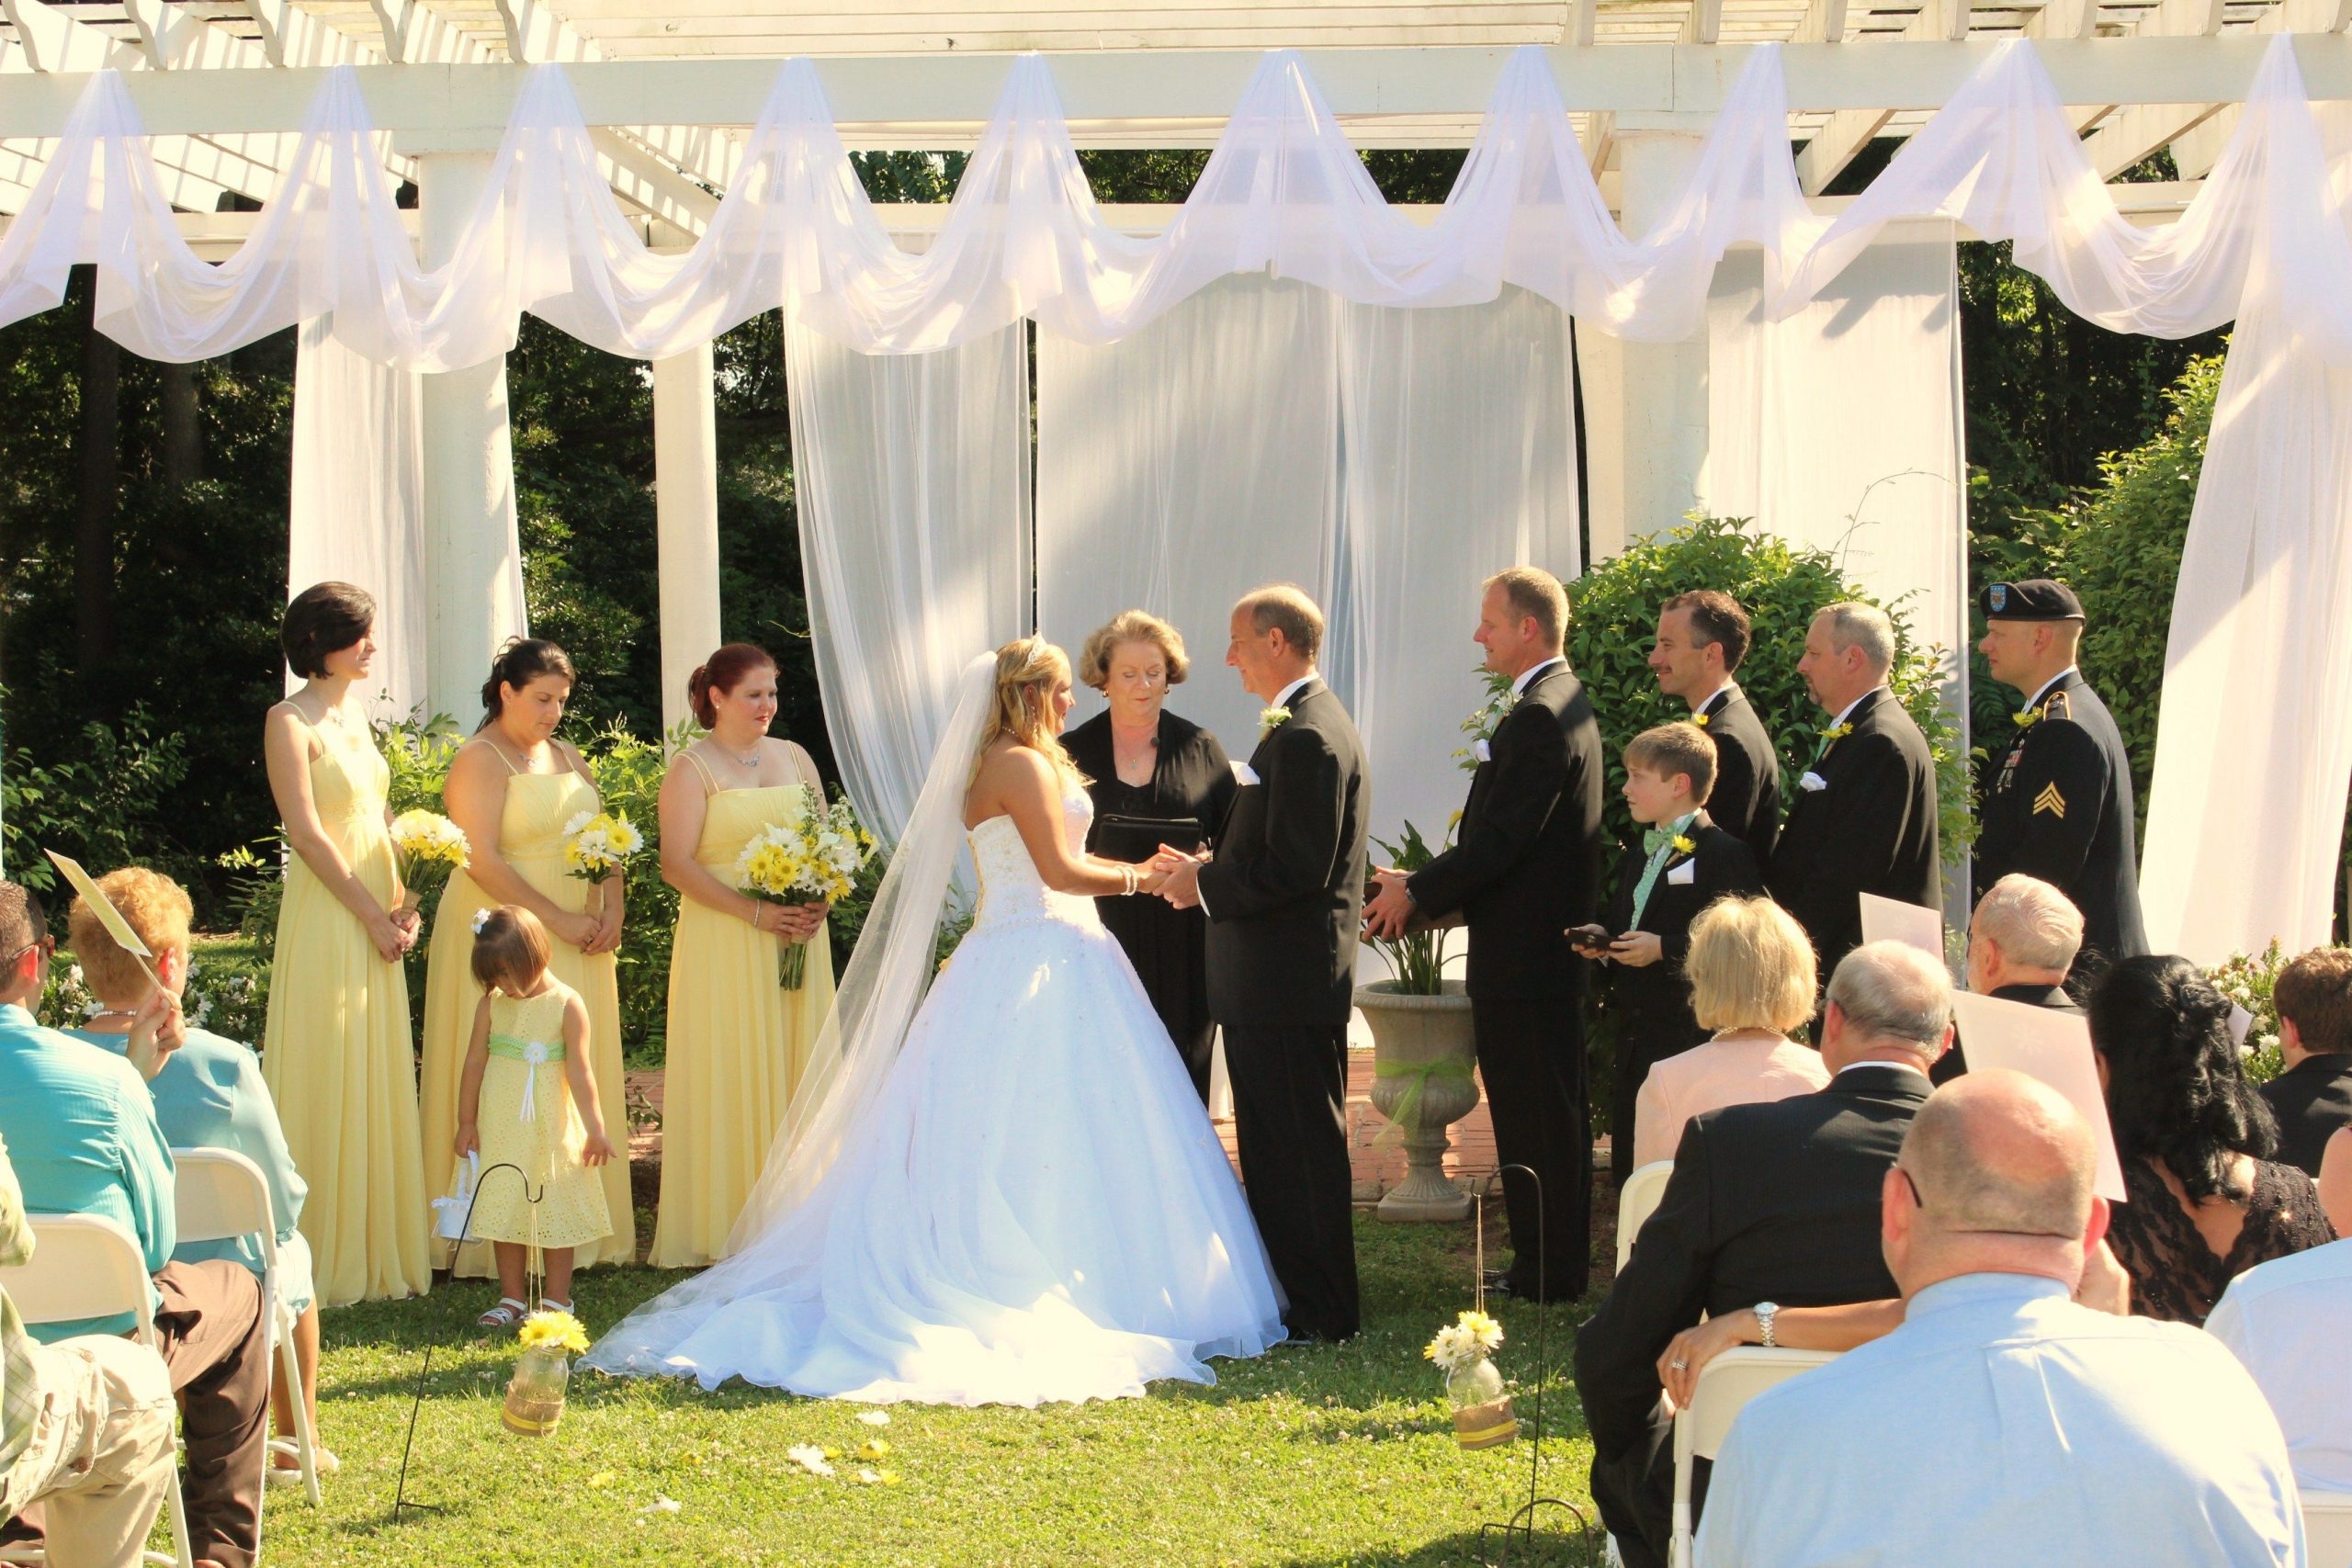 Wedding Ceremony in progress at Augusta Manor in ...